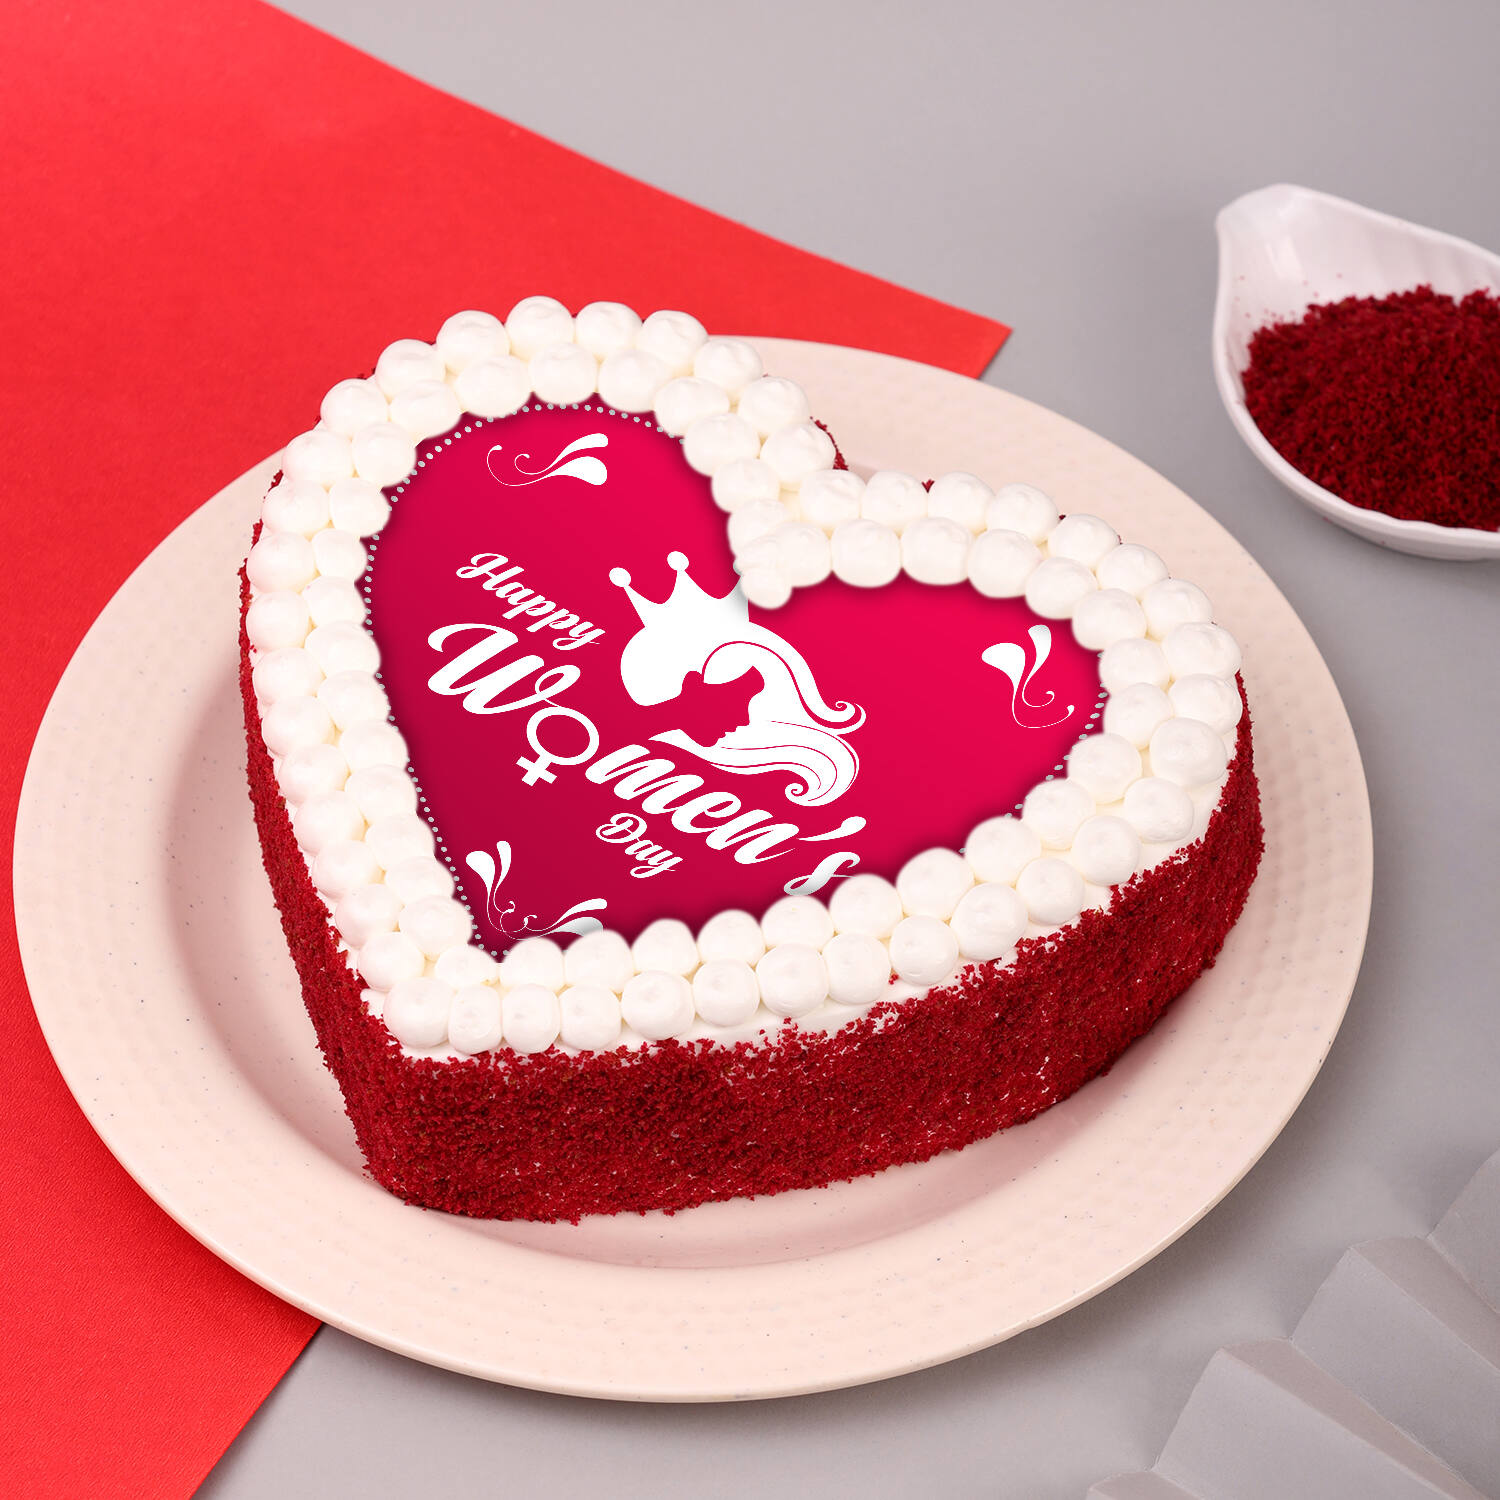 Buy Designer Women's Day Theme Cakes Online | Same Day Delivery in Gurgaon  | Cake, Birthday cake decorating, Pinterest cake